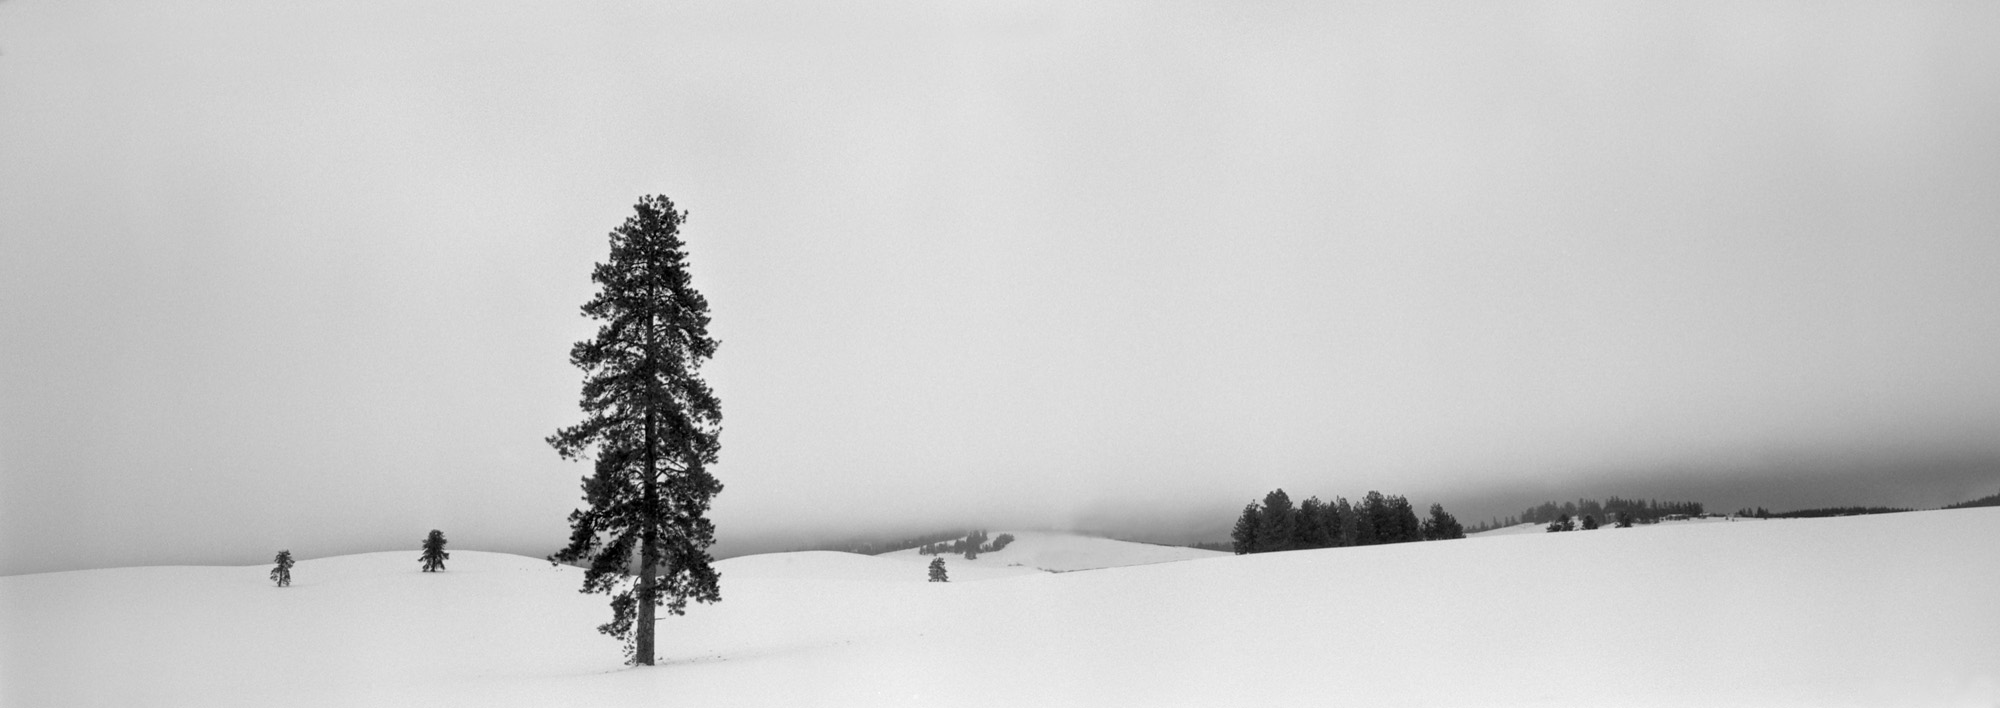 Stoic Trees in Snow, Palouse, 2000.jpg